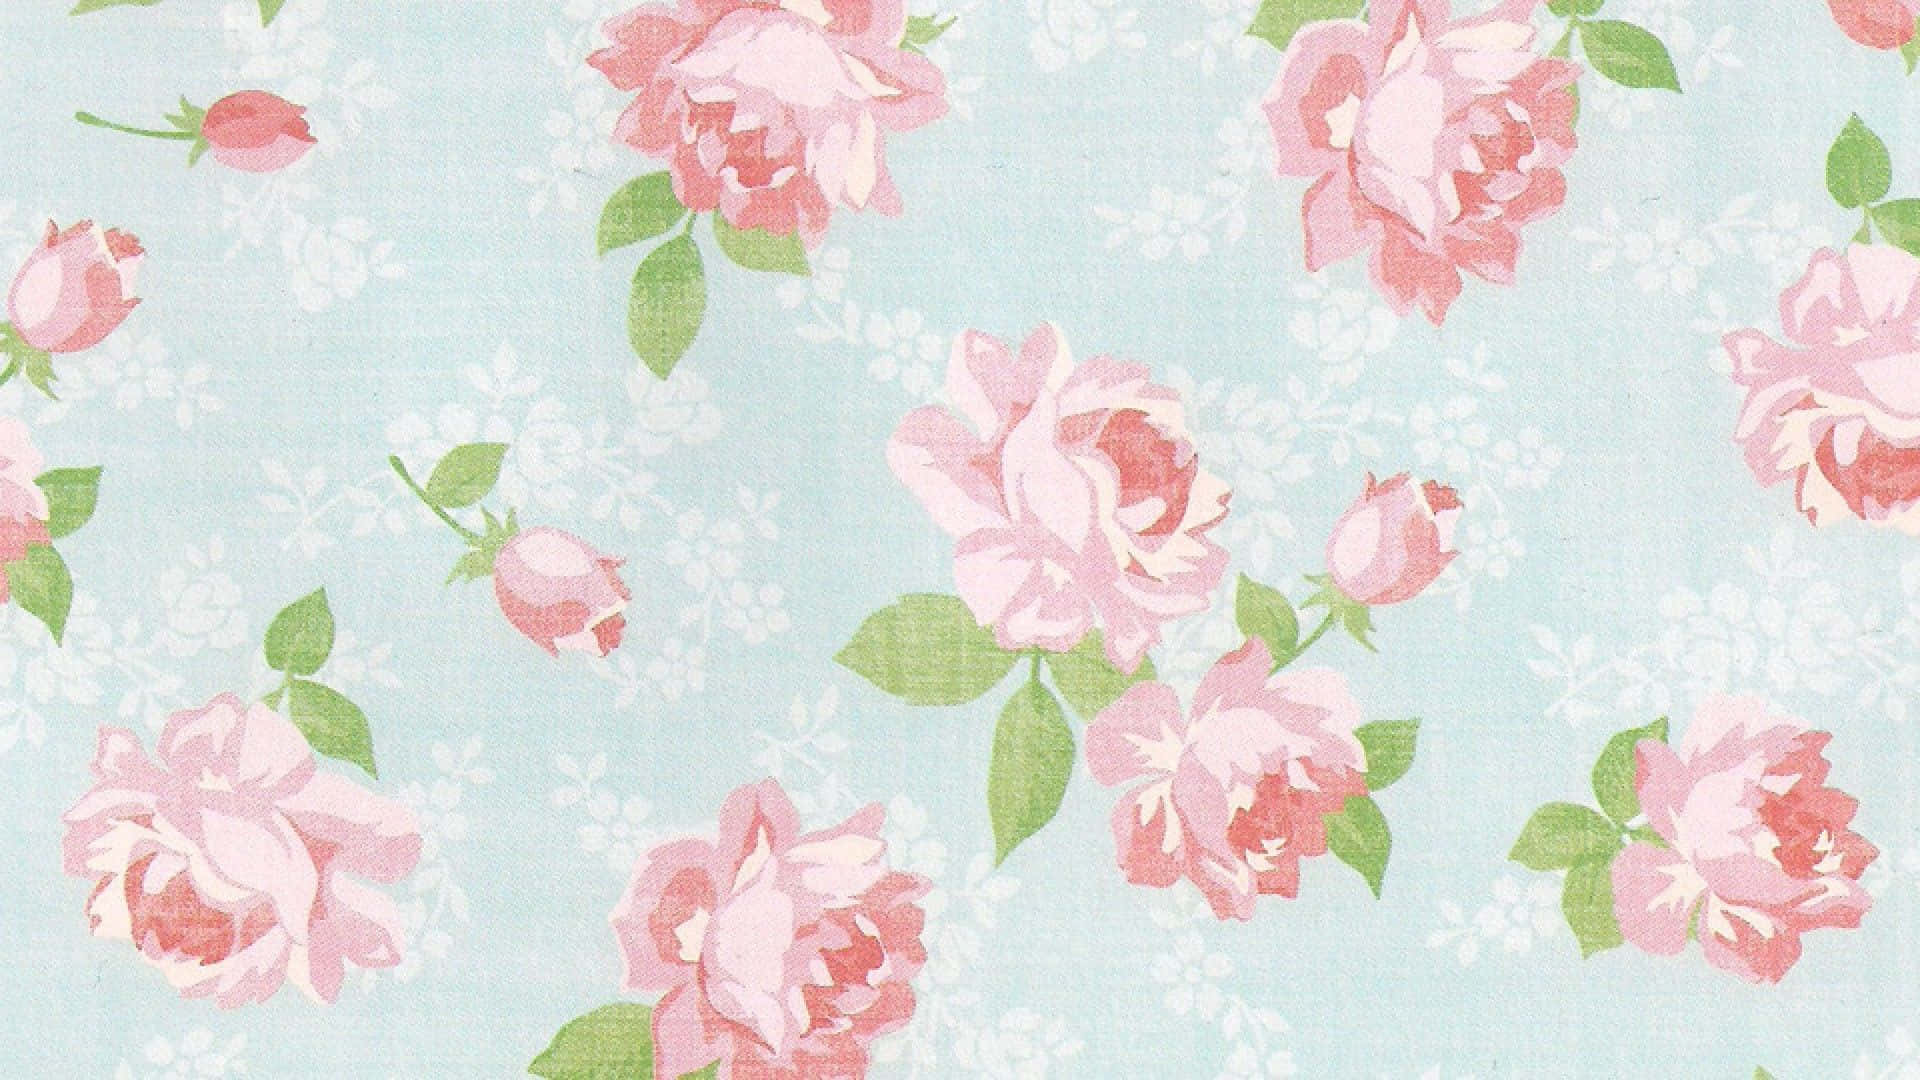 Pin Tumblr Flowers Desktop Wallpaper